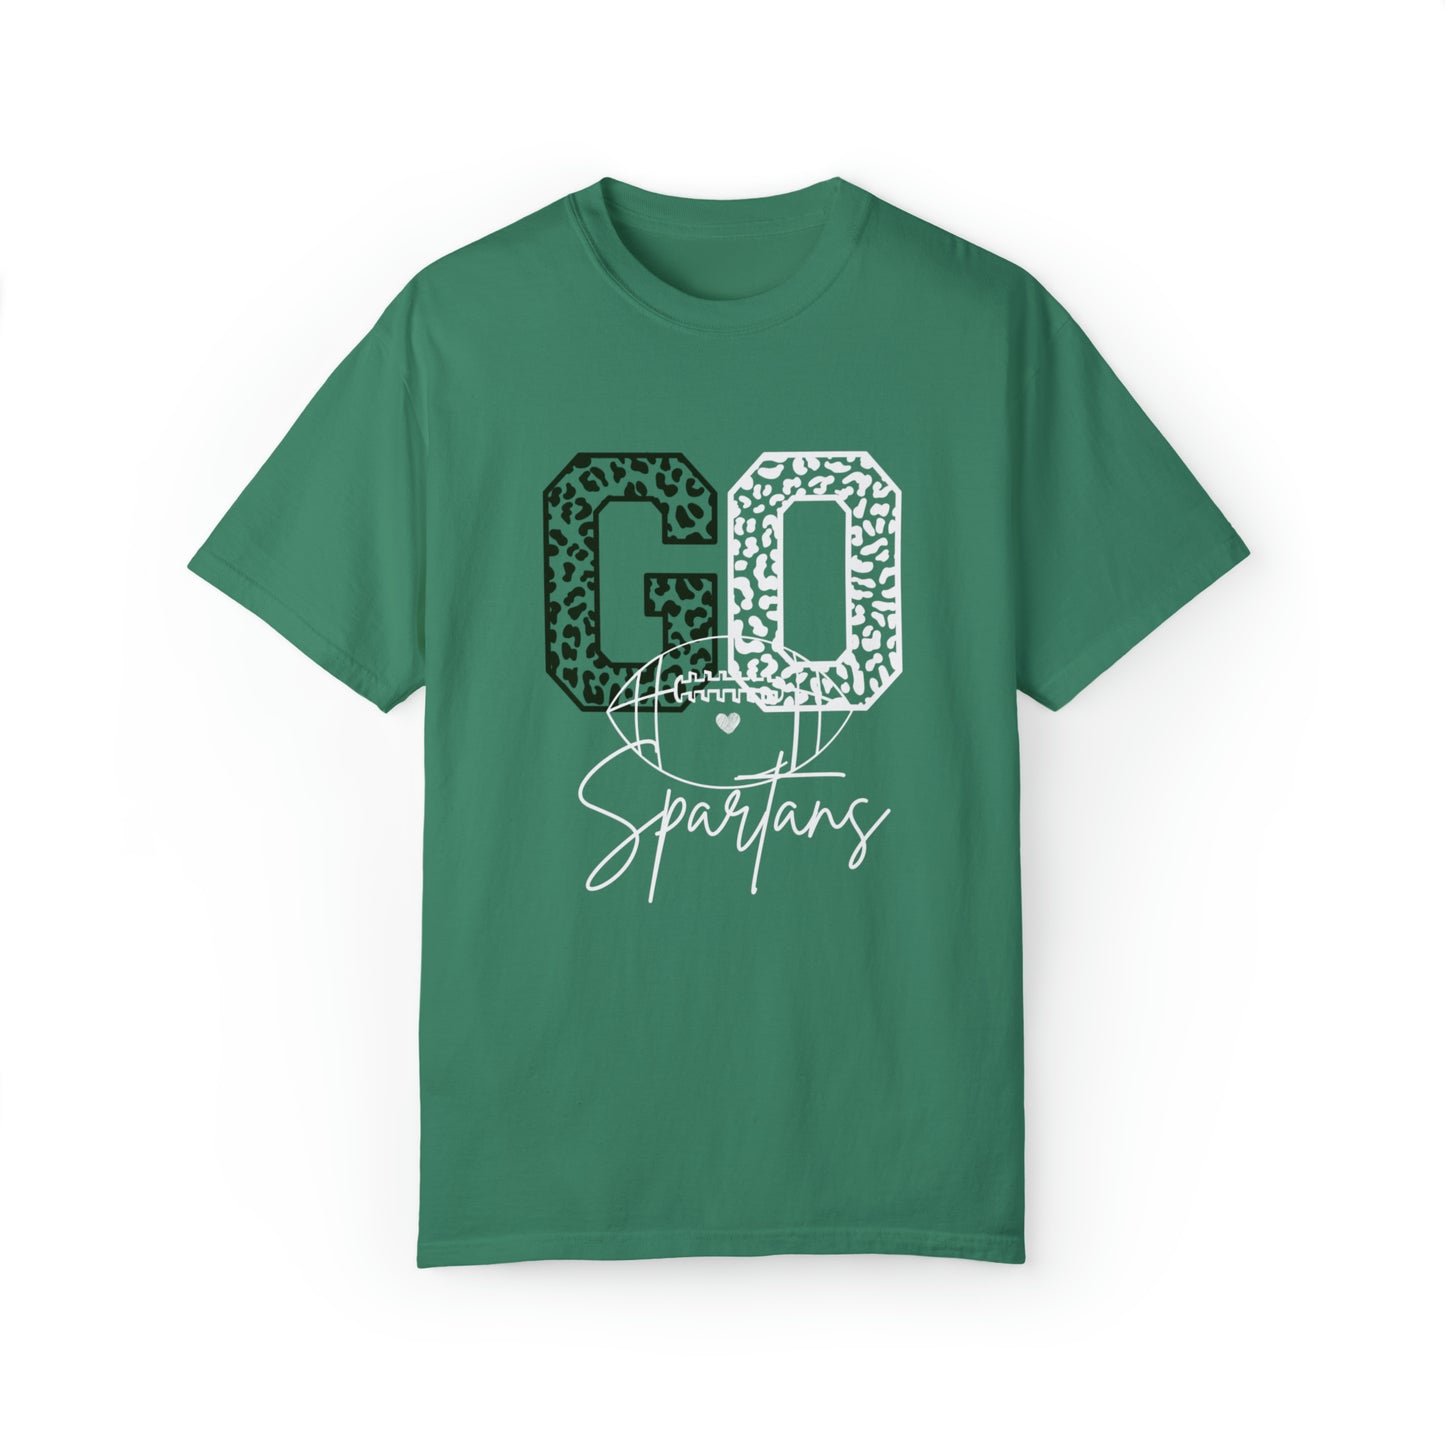 Go Spartans T-shirt